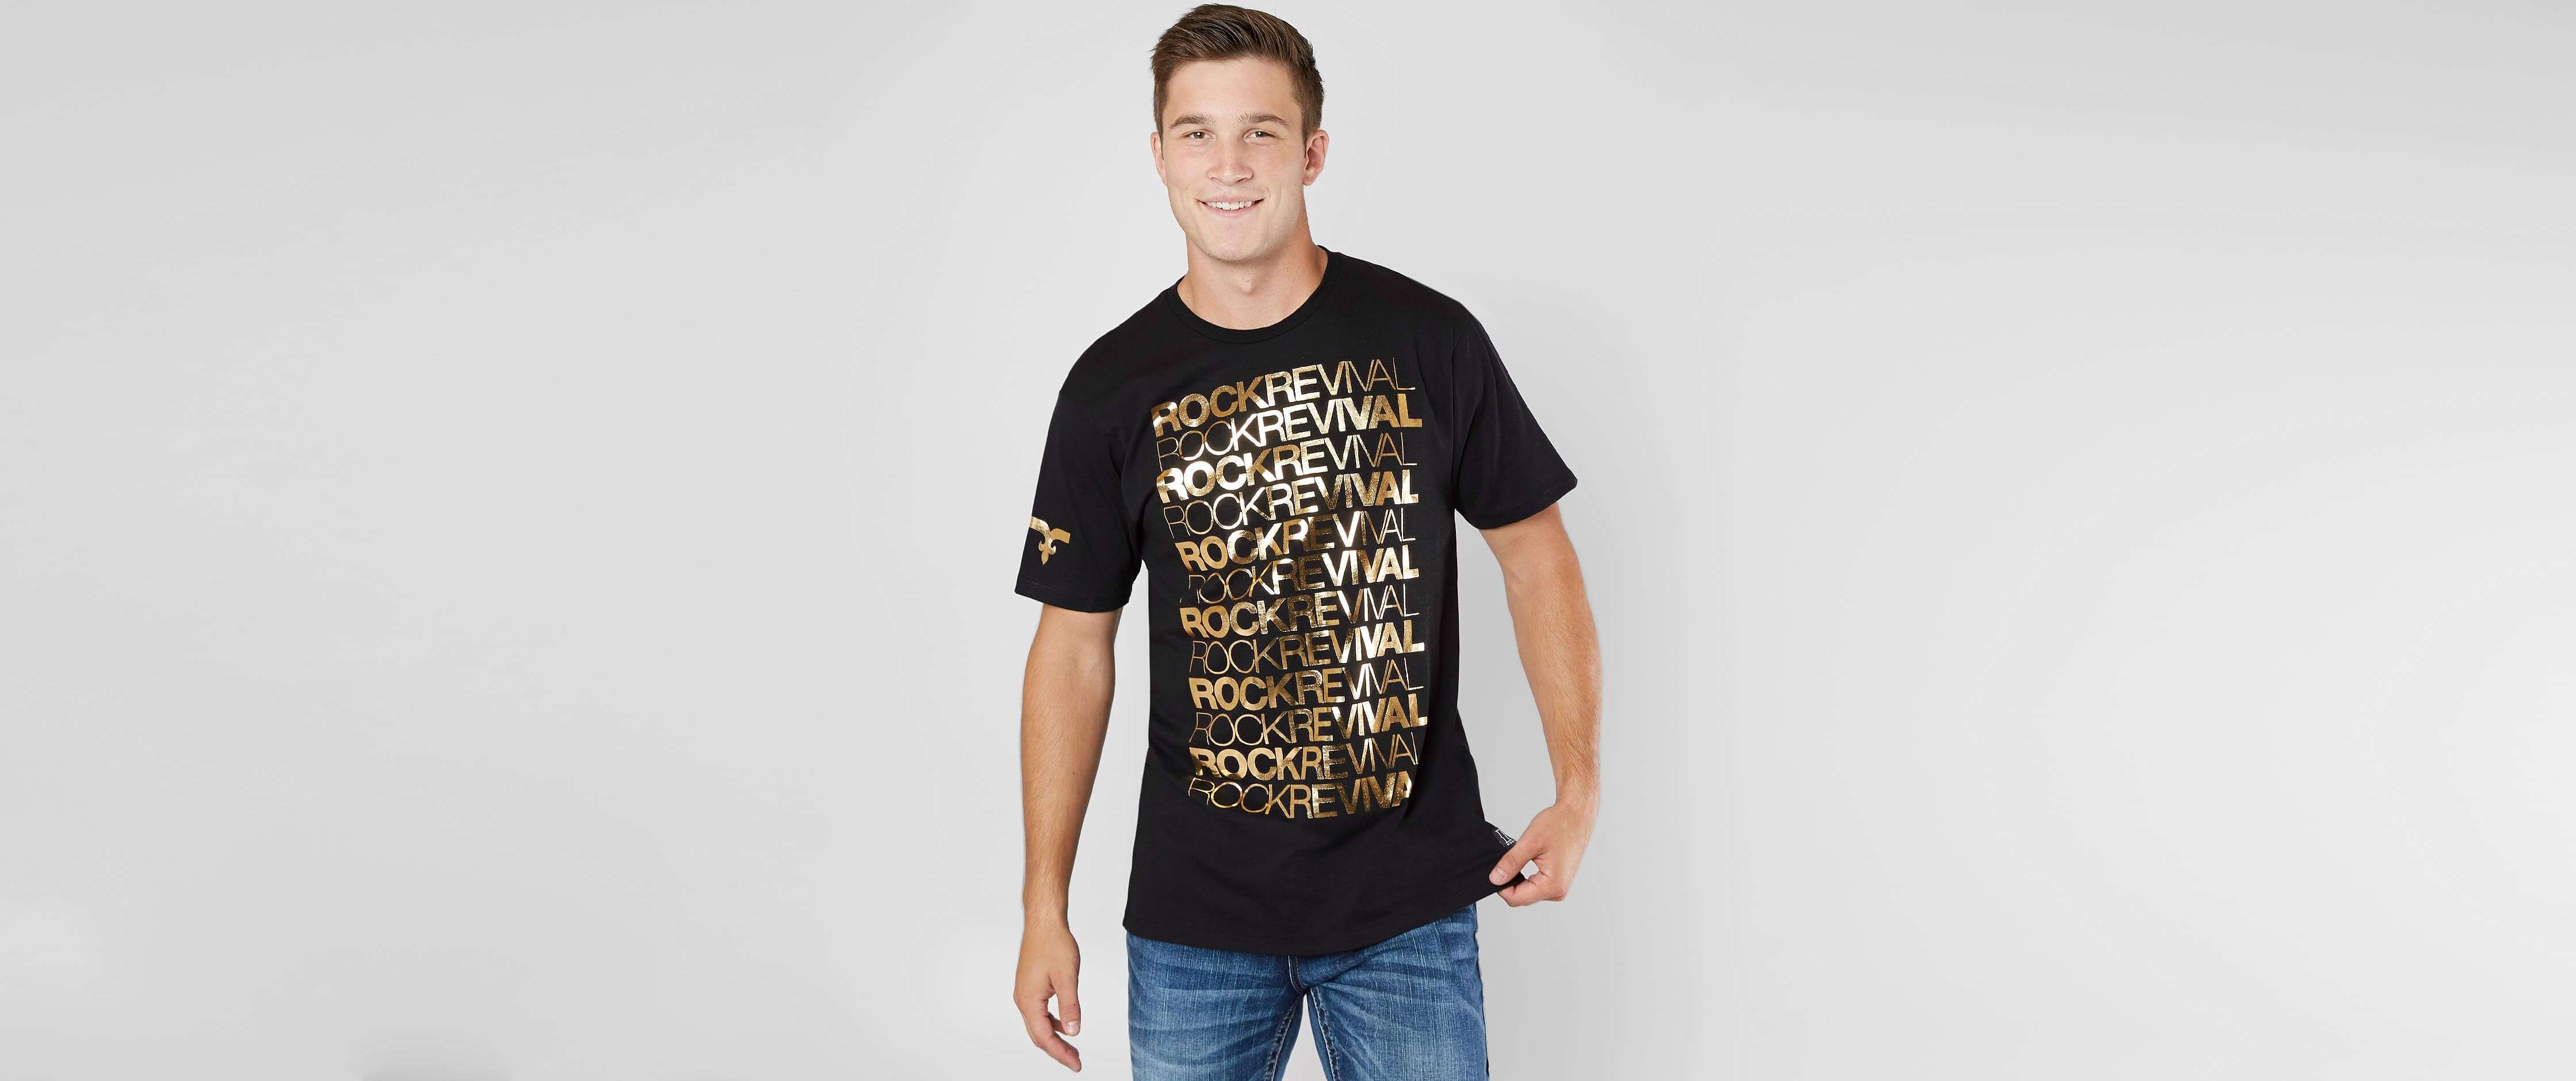 rock revival mens shirts